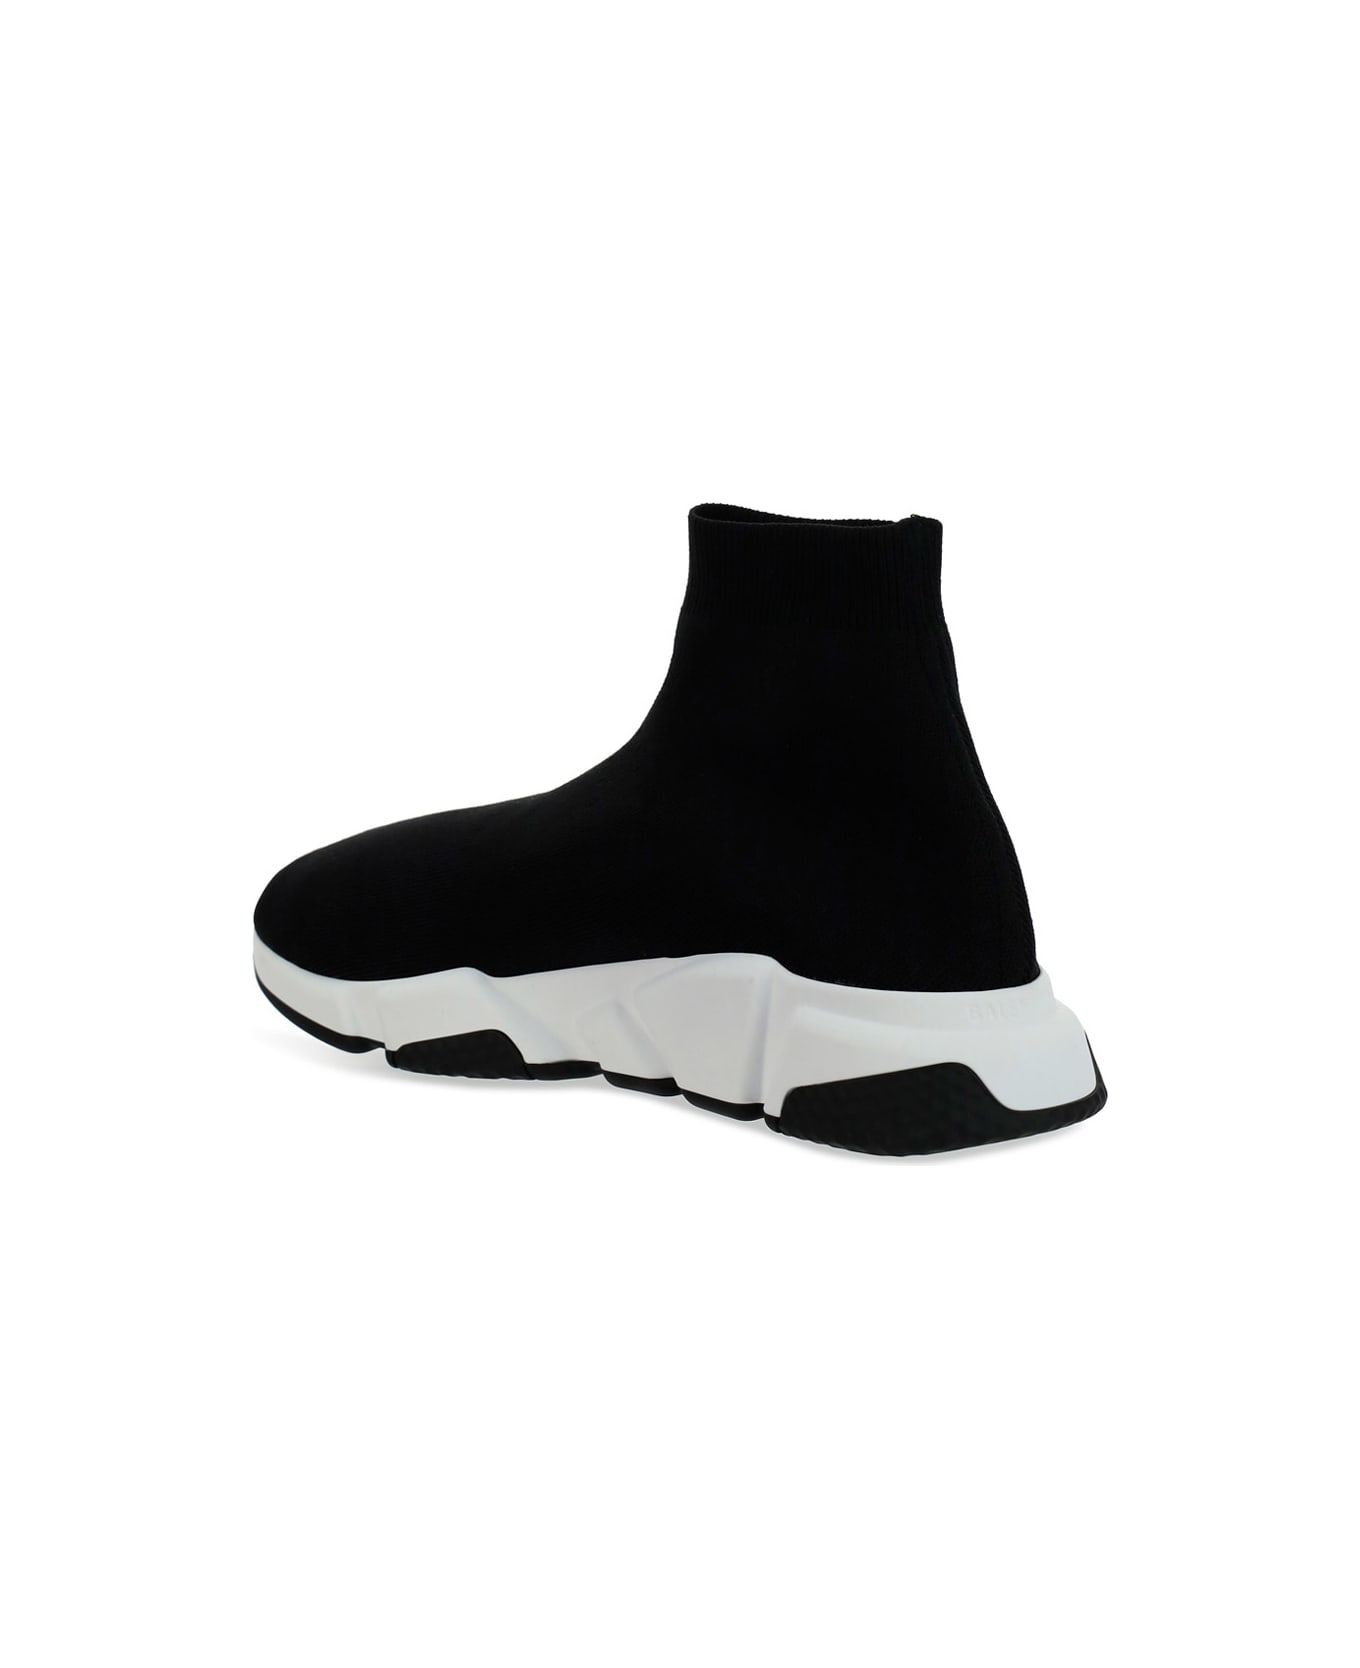 Balenciaga Speed Recycled Sneakers - Black/white/black